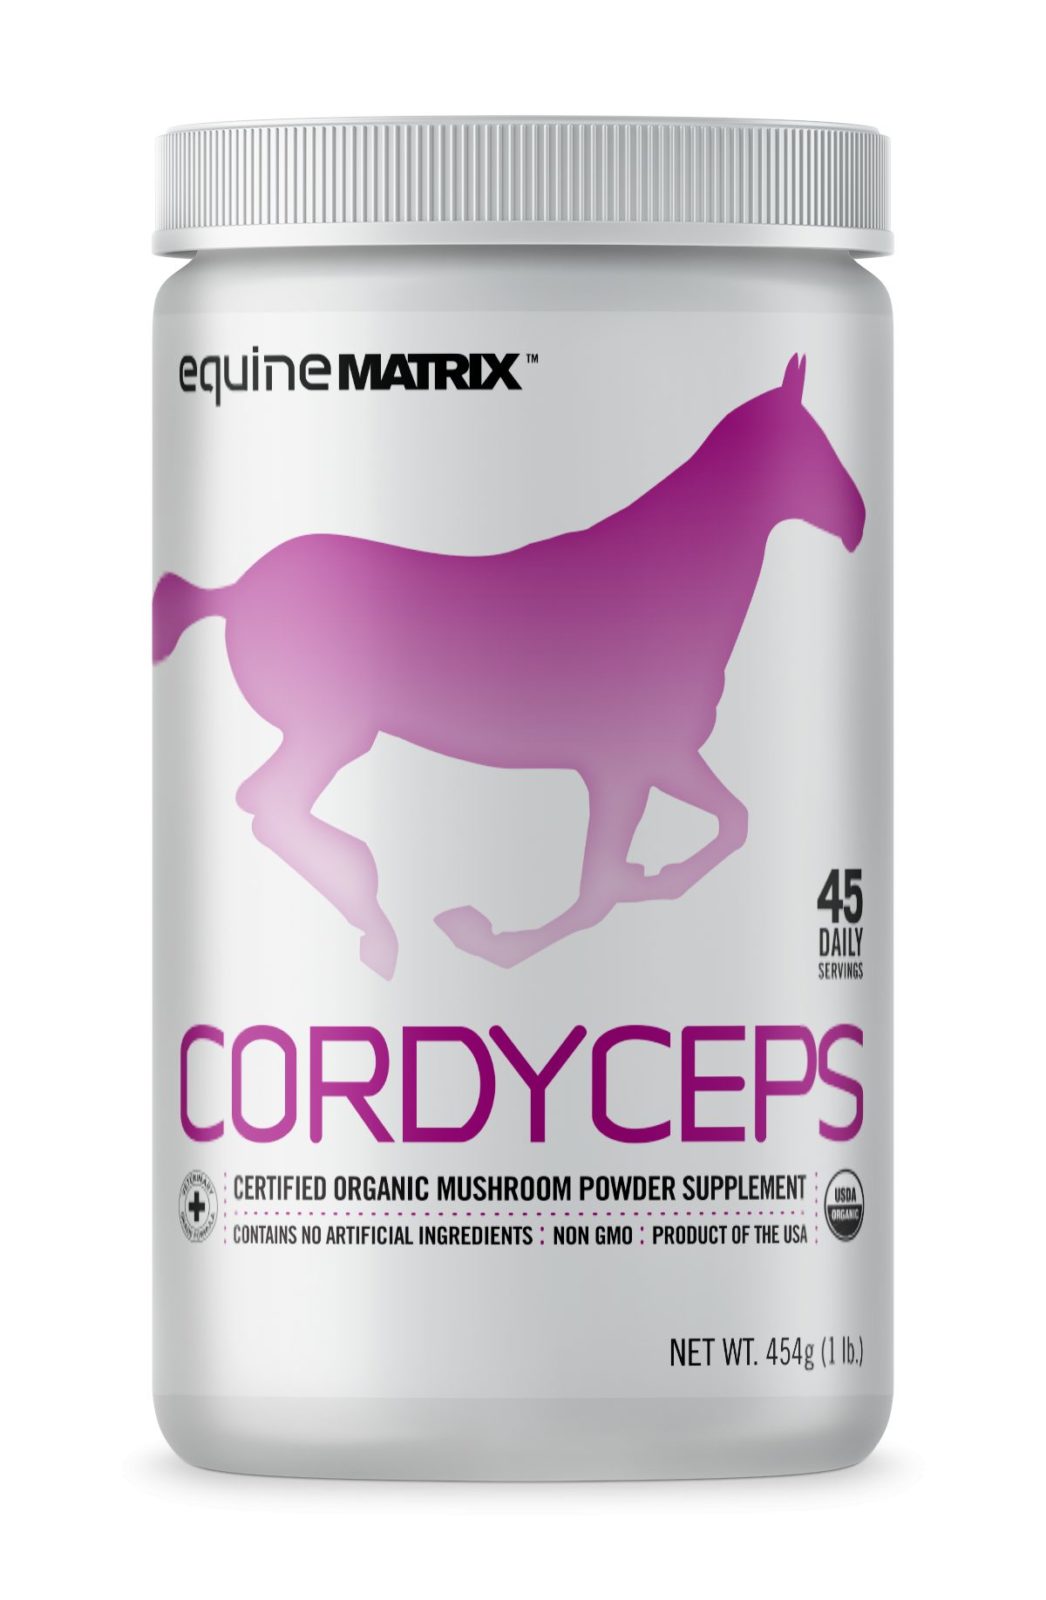 variant1|Cordyceps Matrix 45 servings